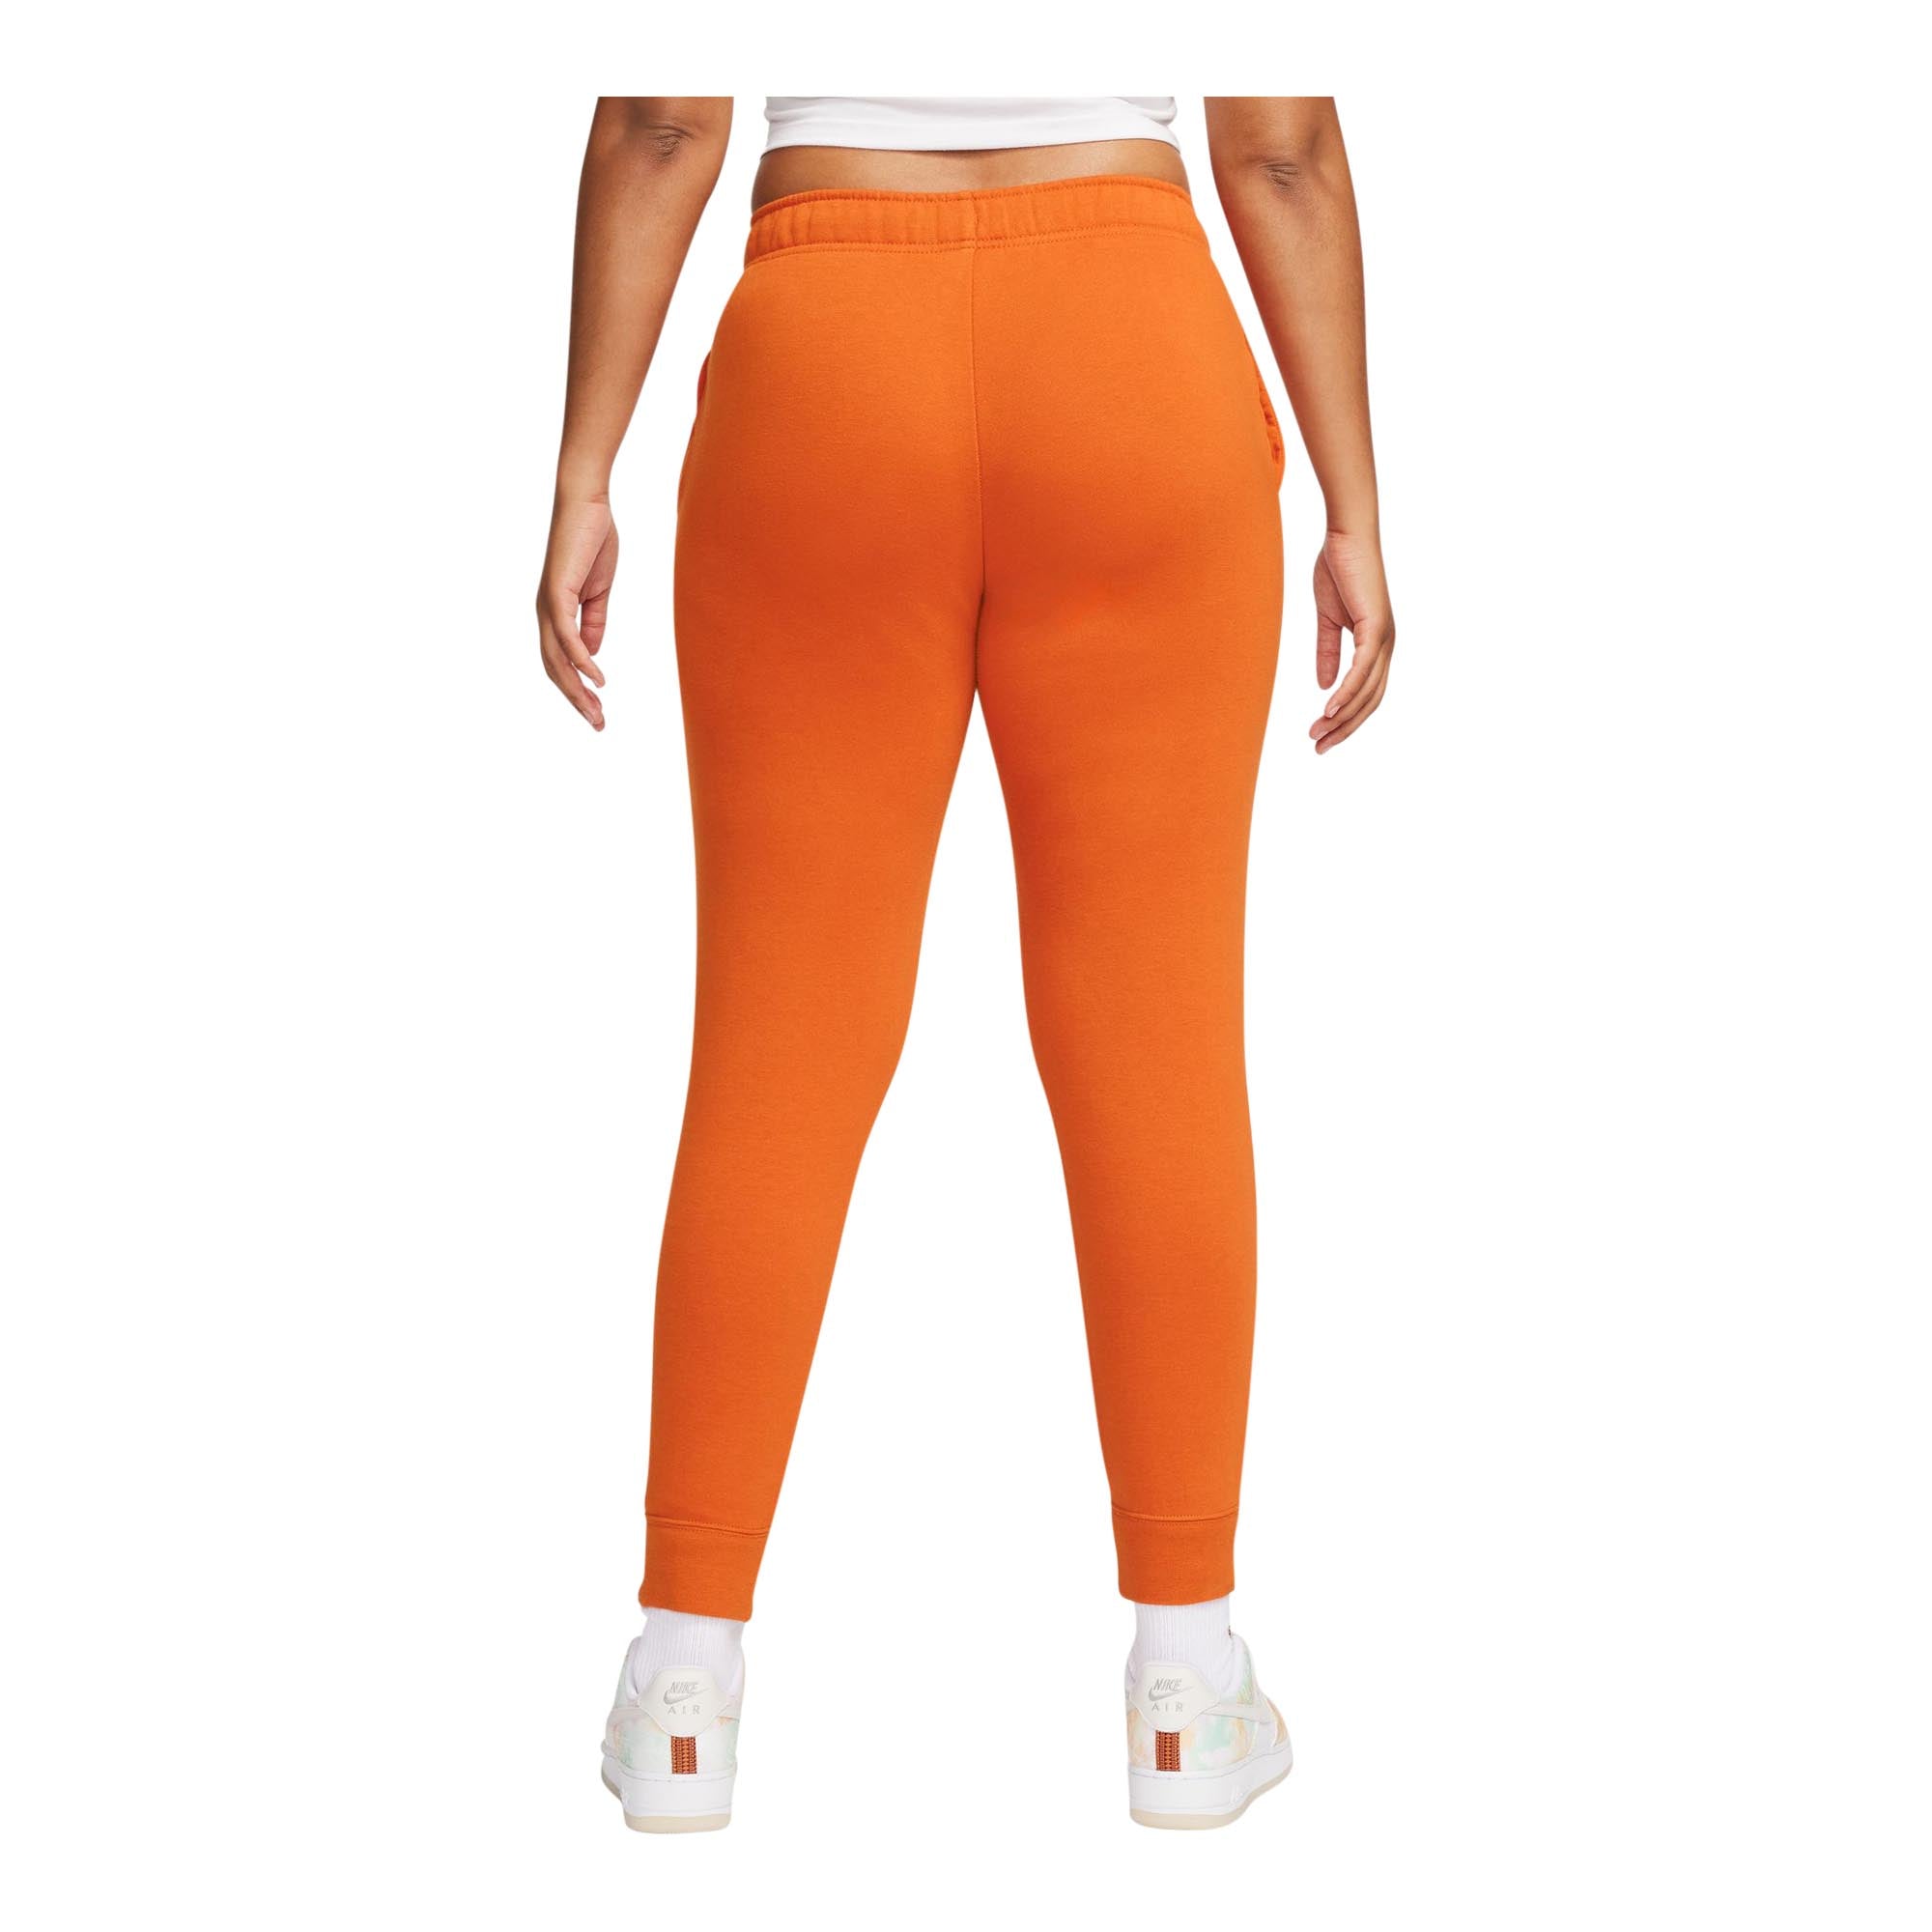 Nike Performance SHORT - Leggings - orange/red/orange - Zalando.de